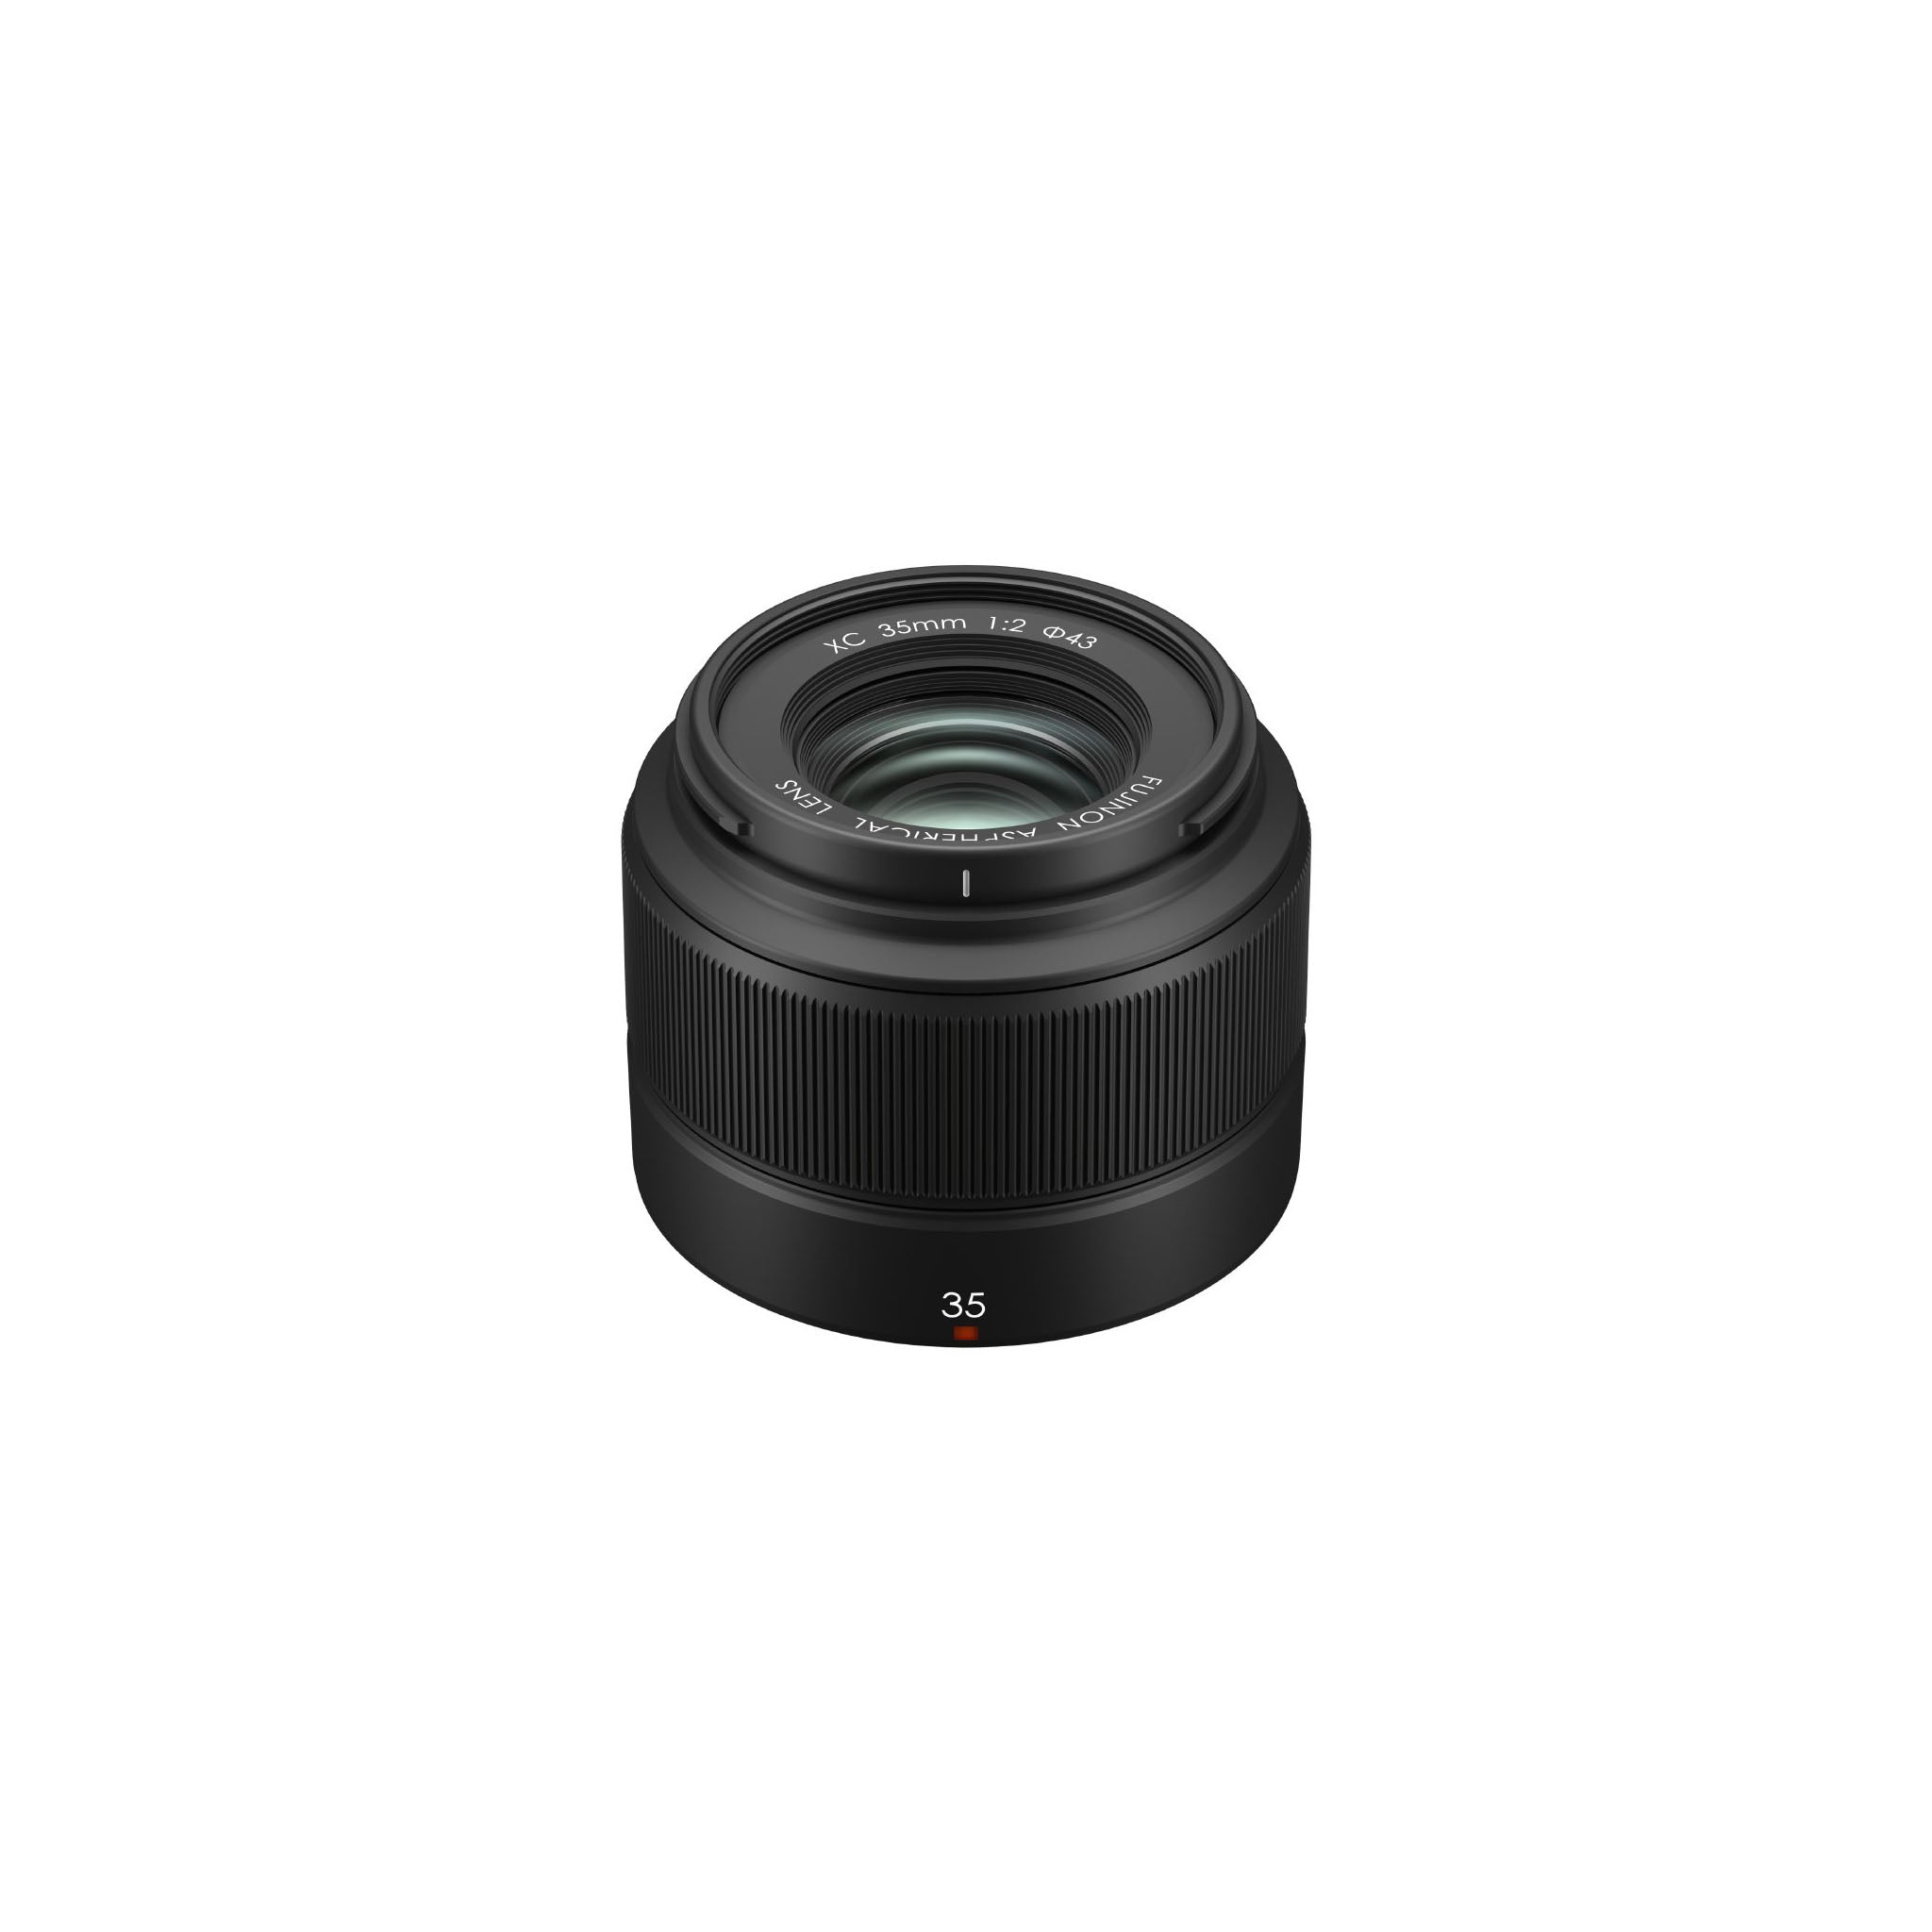 Fujifilm XC 35mm F2.0 Lens